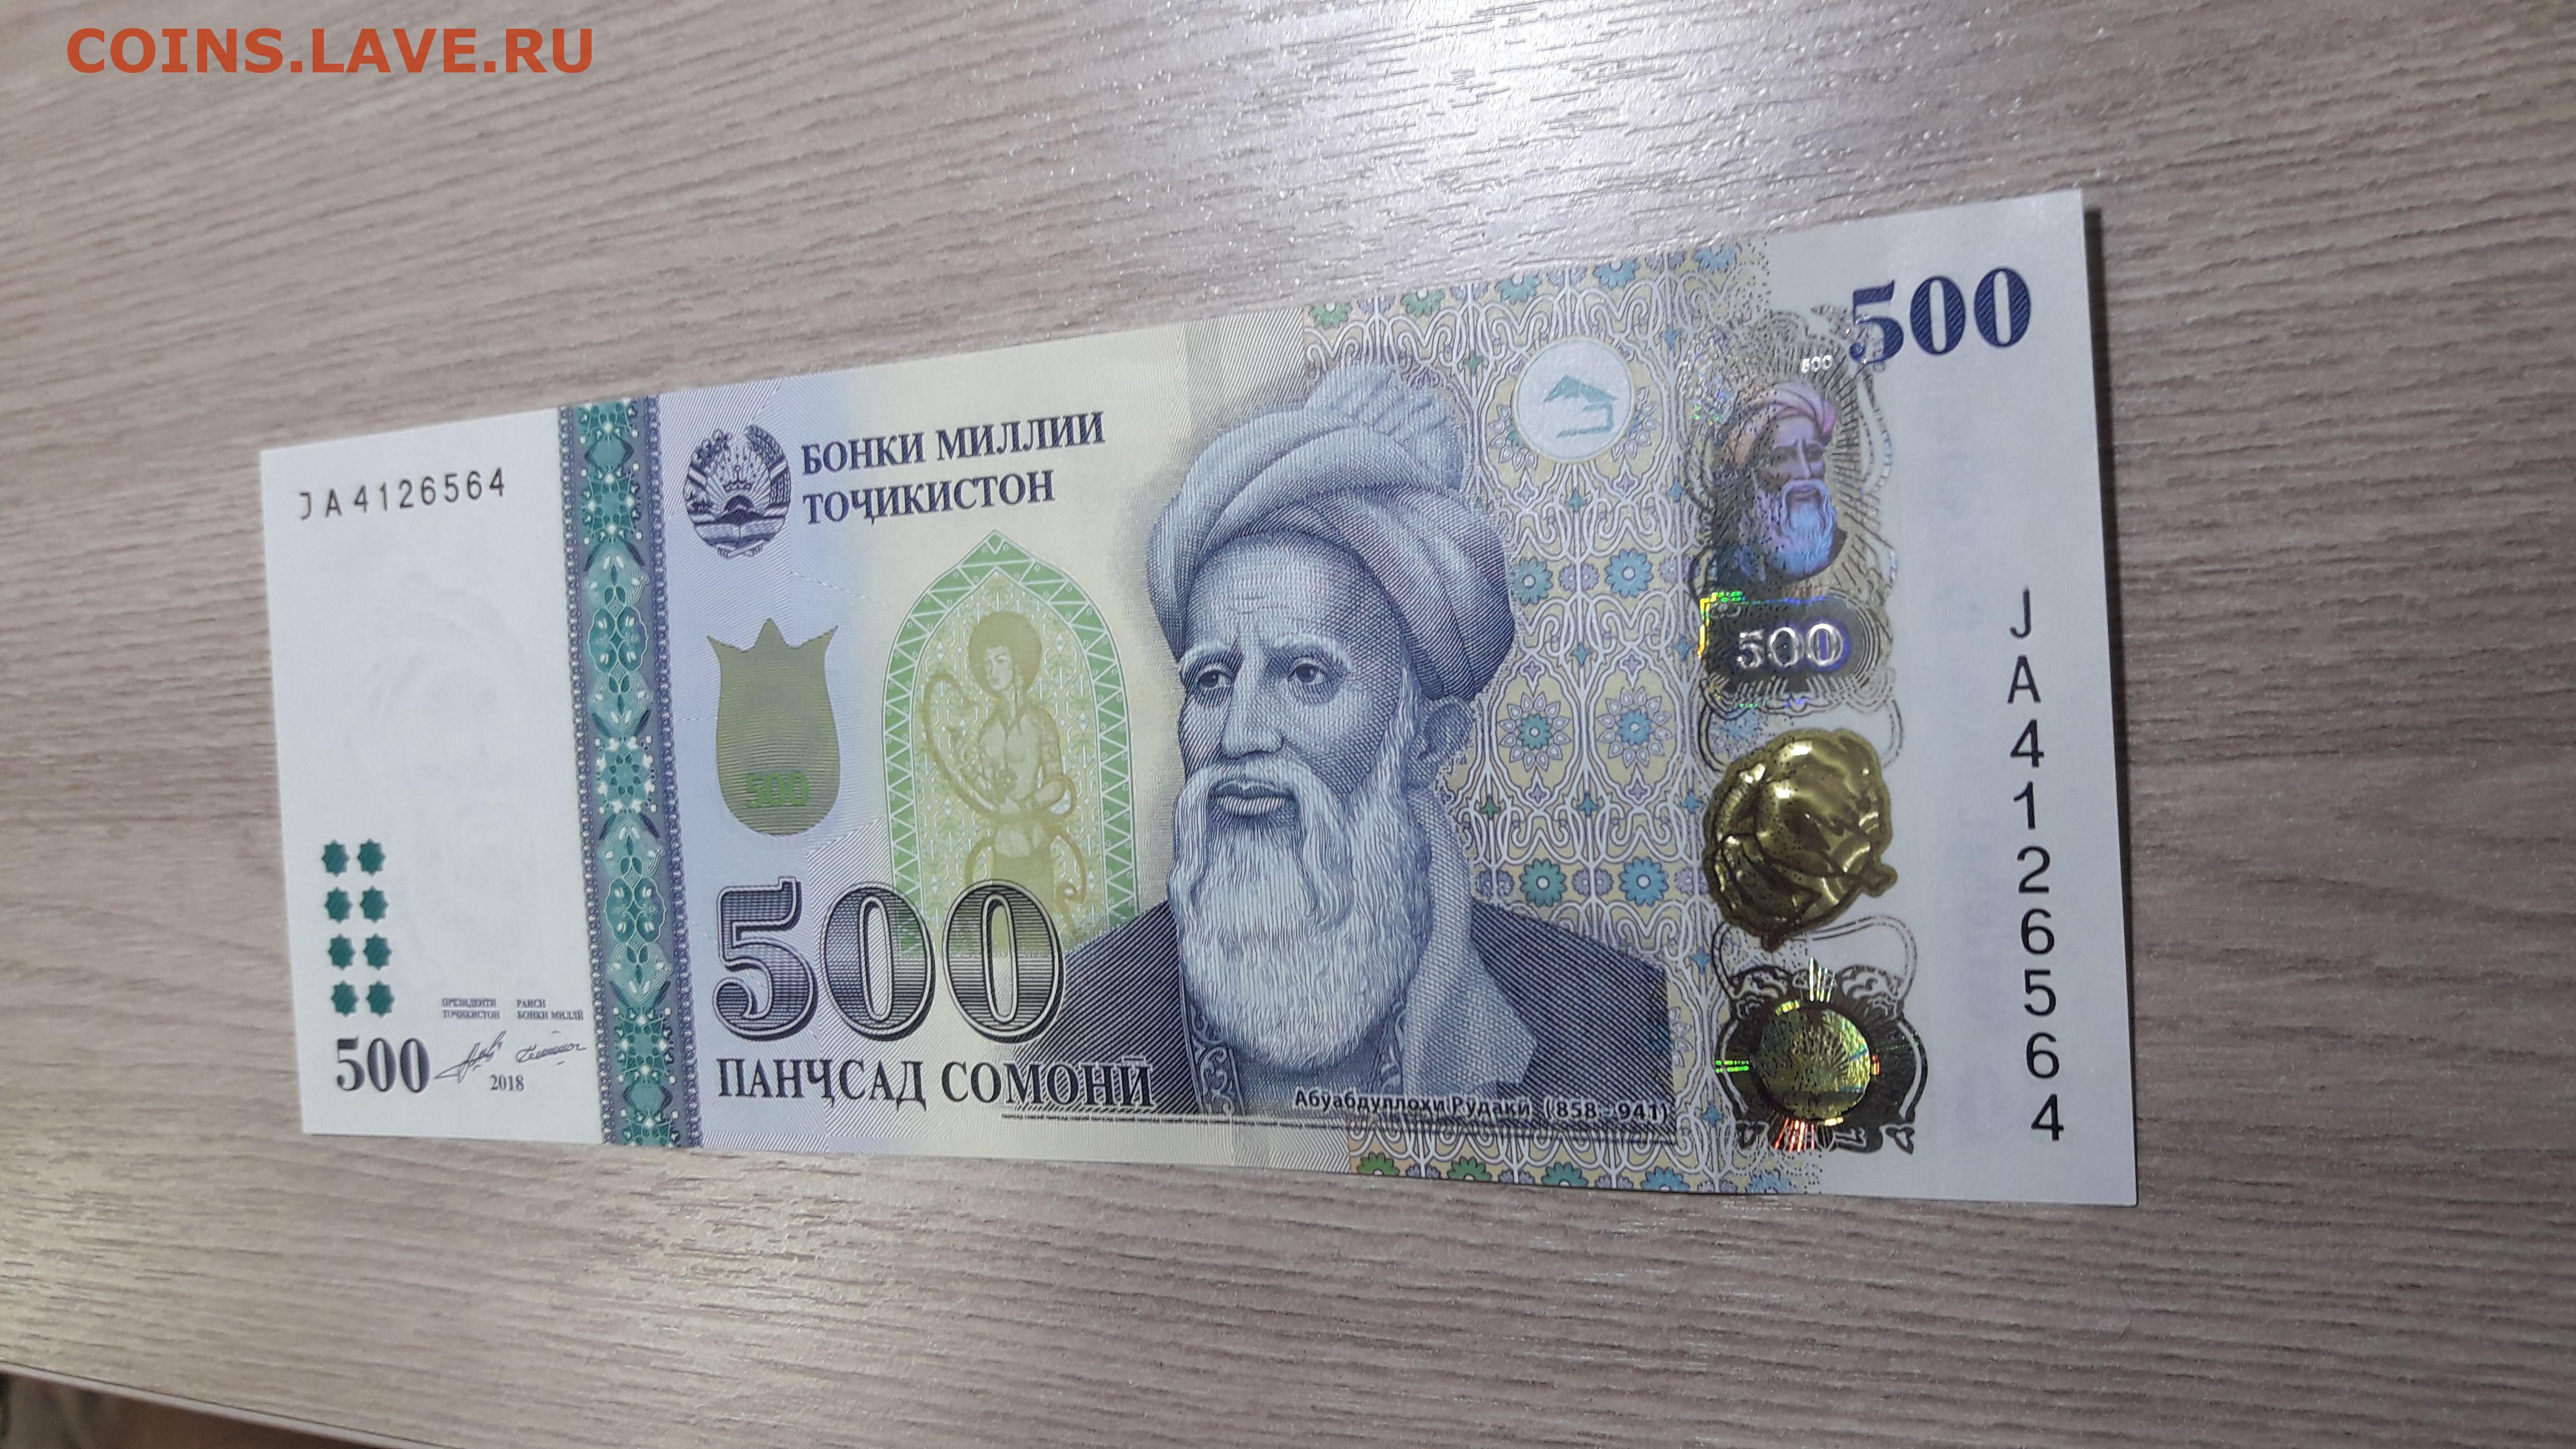 500 таджикски